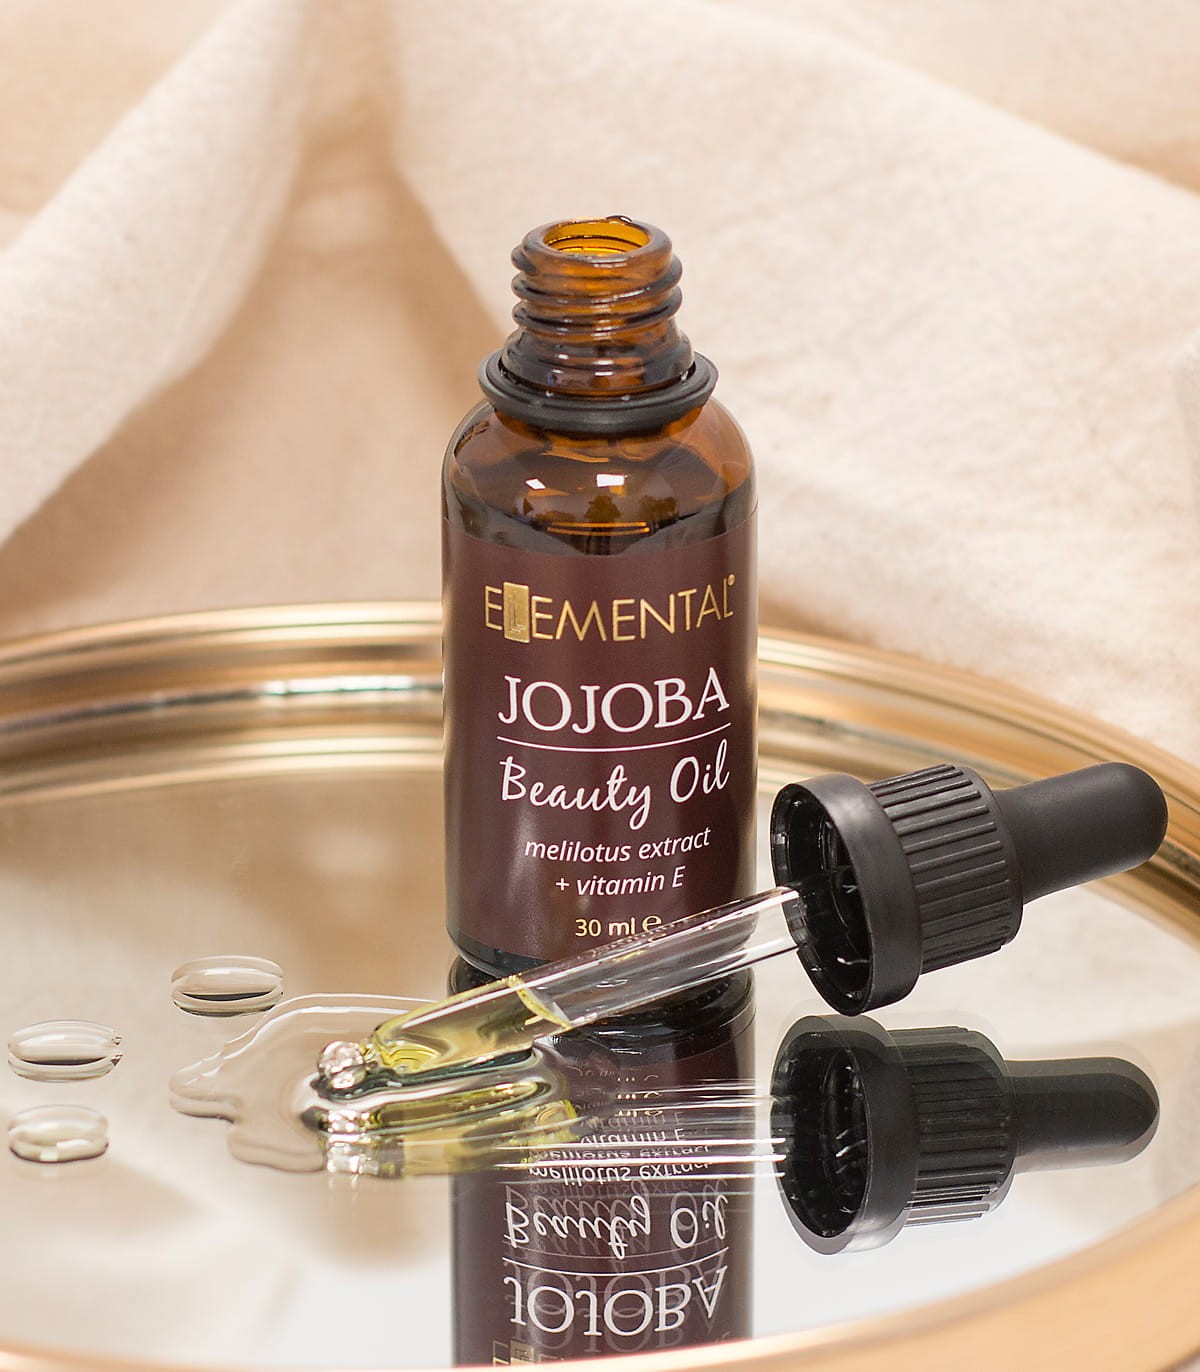 Jojoba Beauty Oil